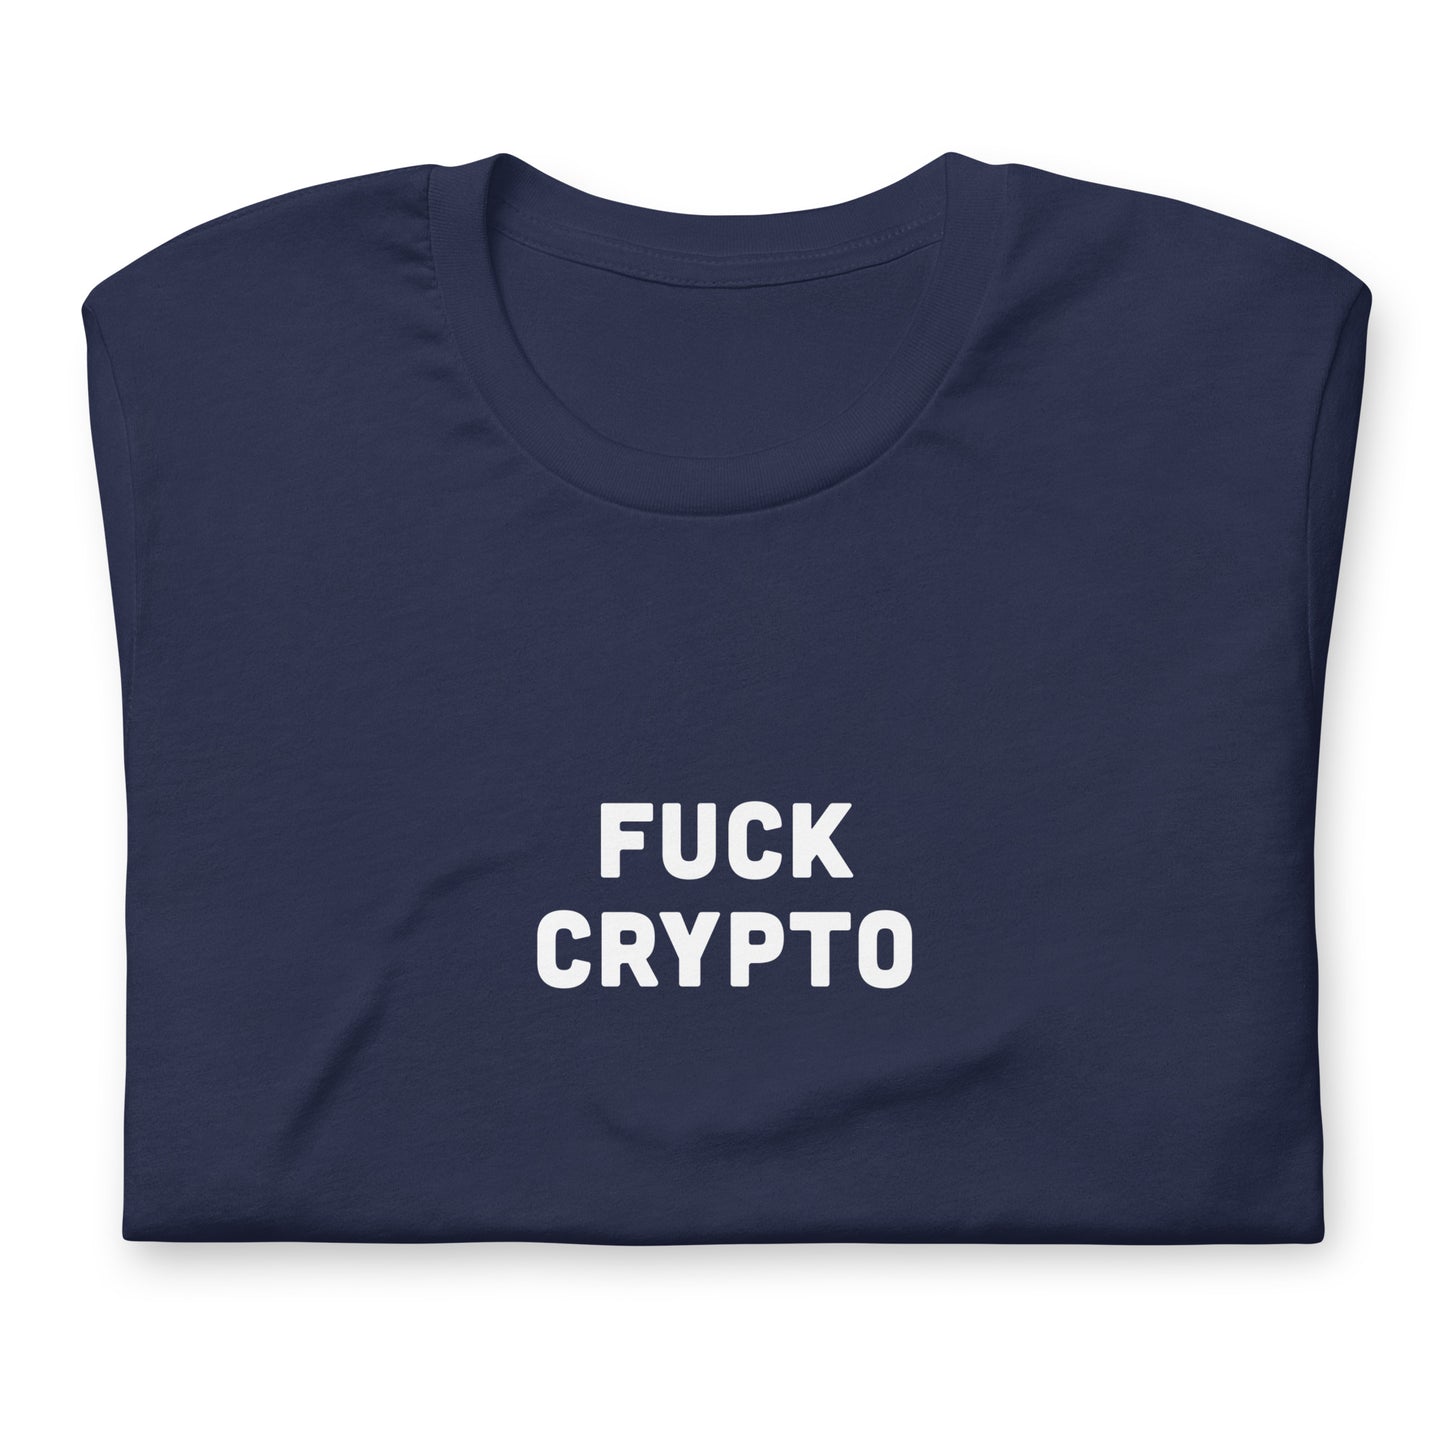 Fuck Crypto T-Shirt Size L Color Black